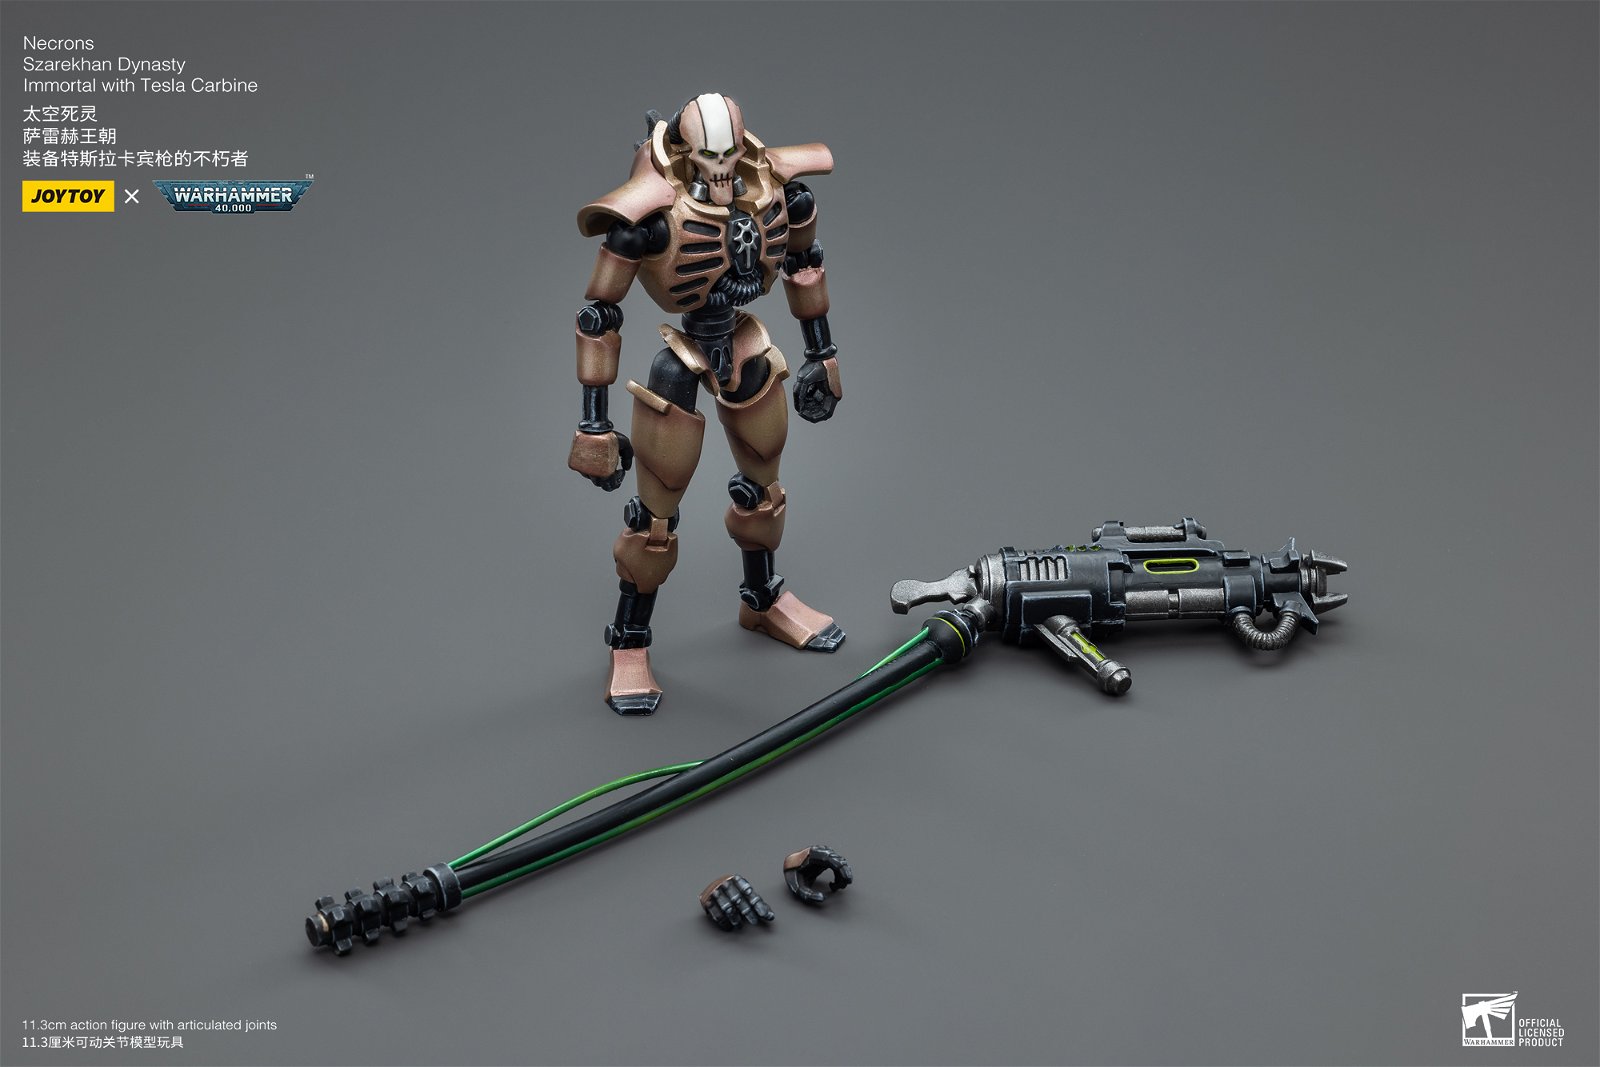 JoyToy Action Figure Warhammer 40K Necrons Szarekhan Dynasty lmmortal with Tesla Carbine